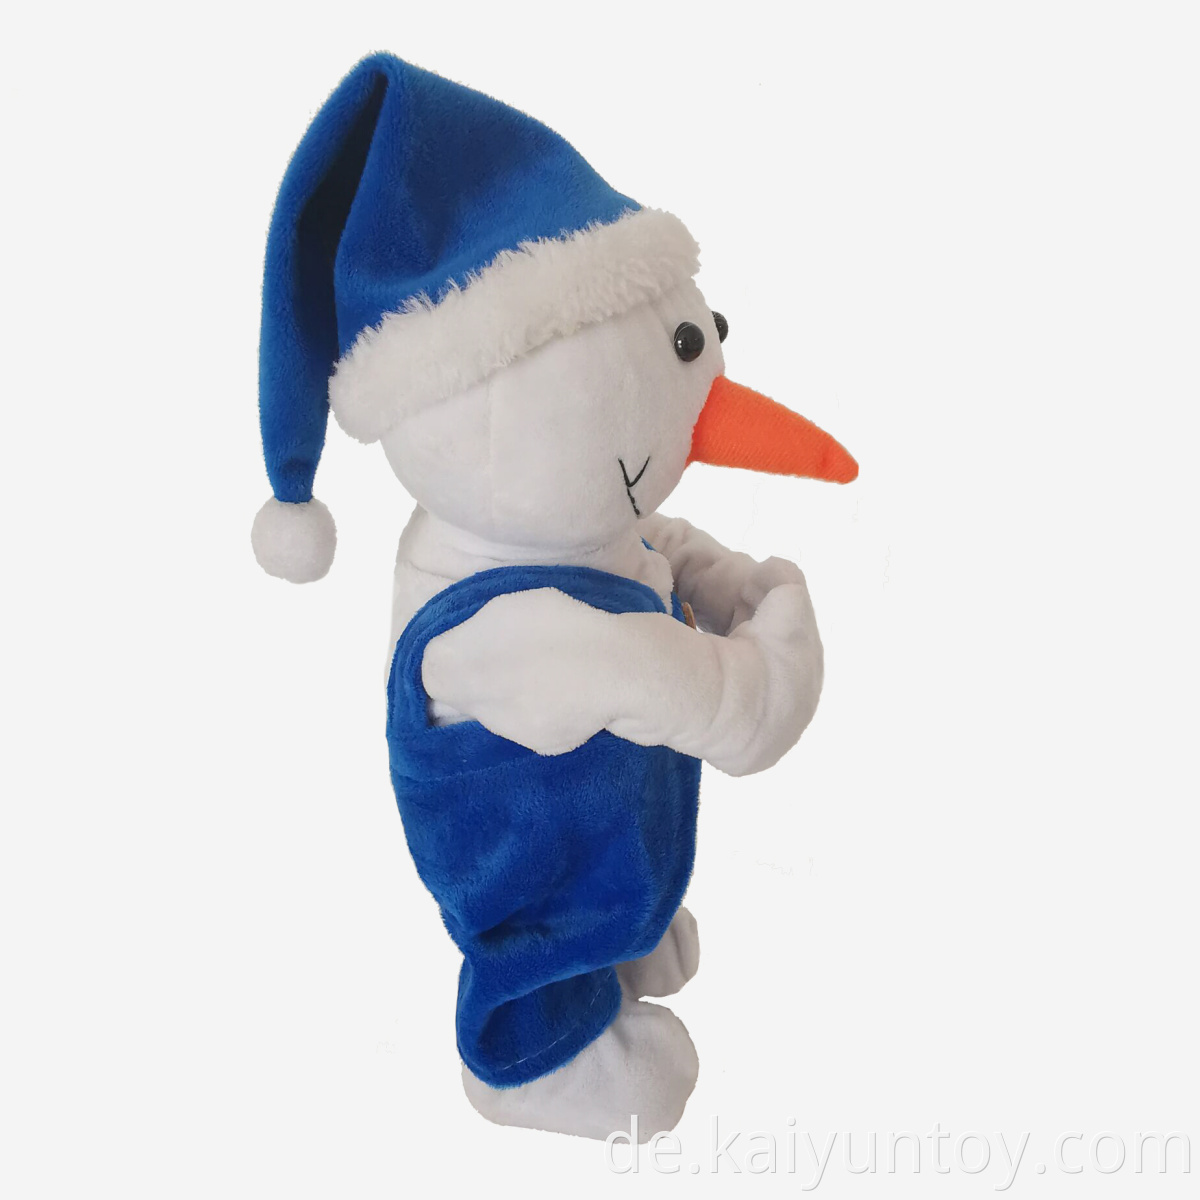 personalized snowman ornaments